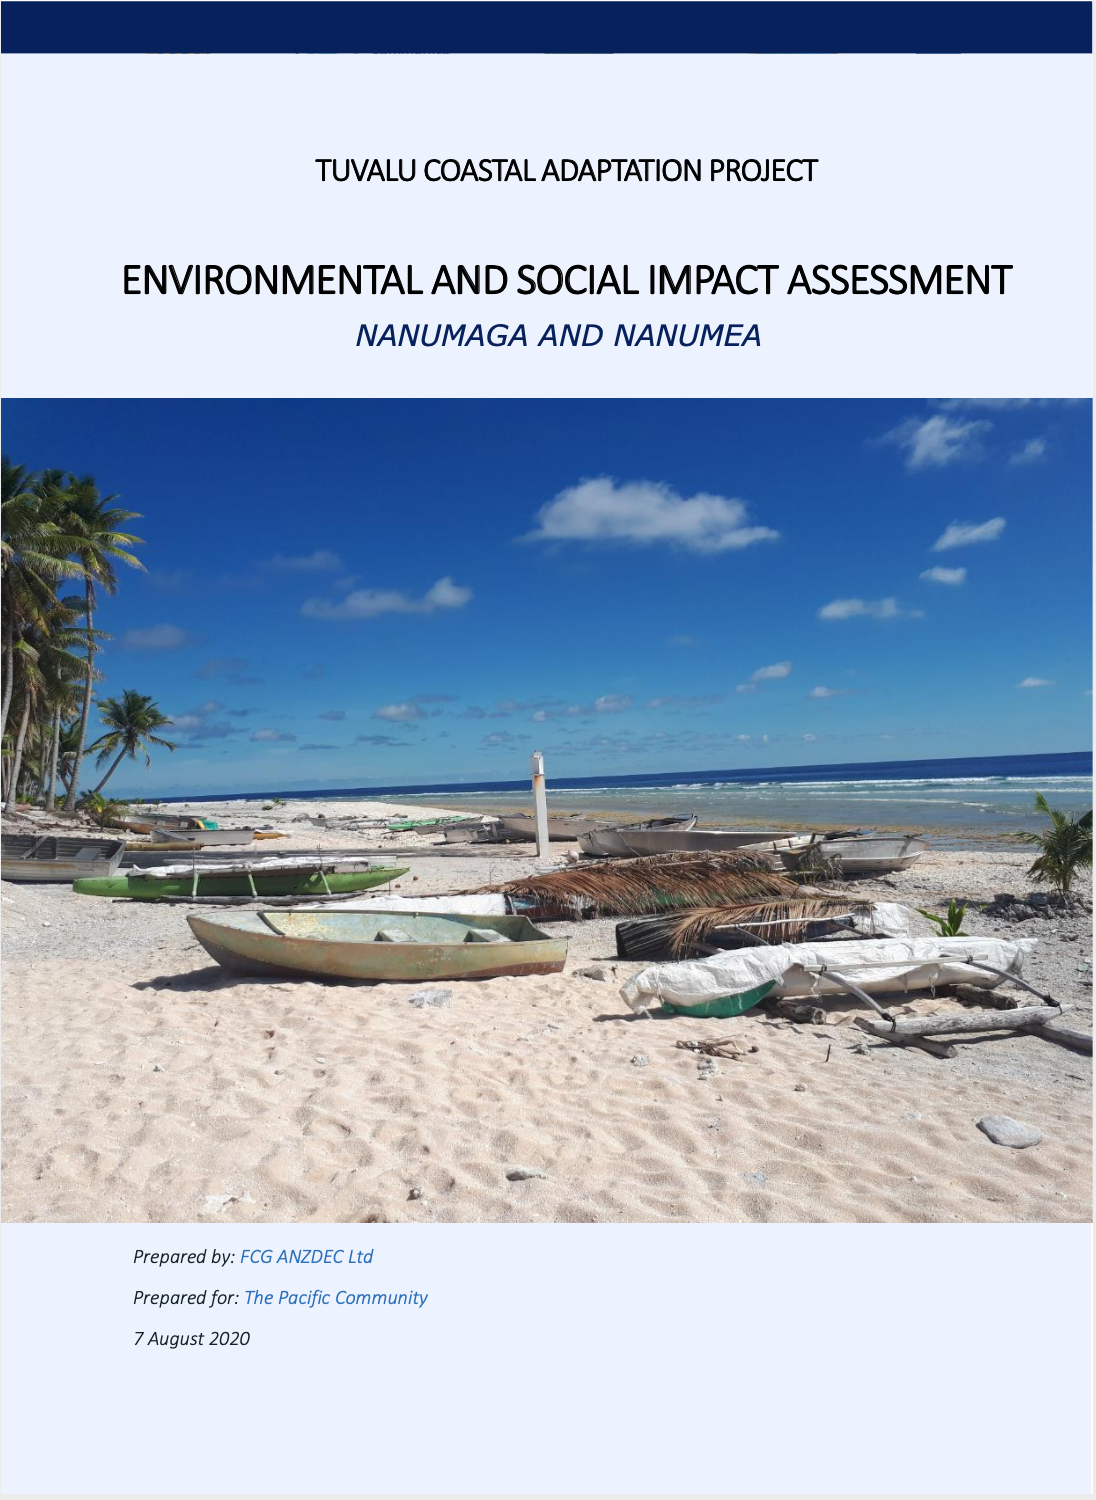 Environmental and Social Impact Assessment for Nanumaga and Nanumea islands